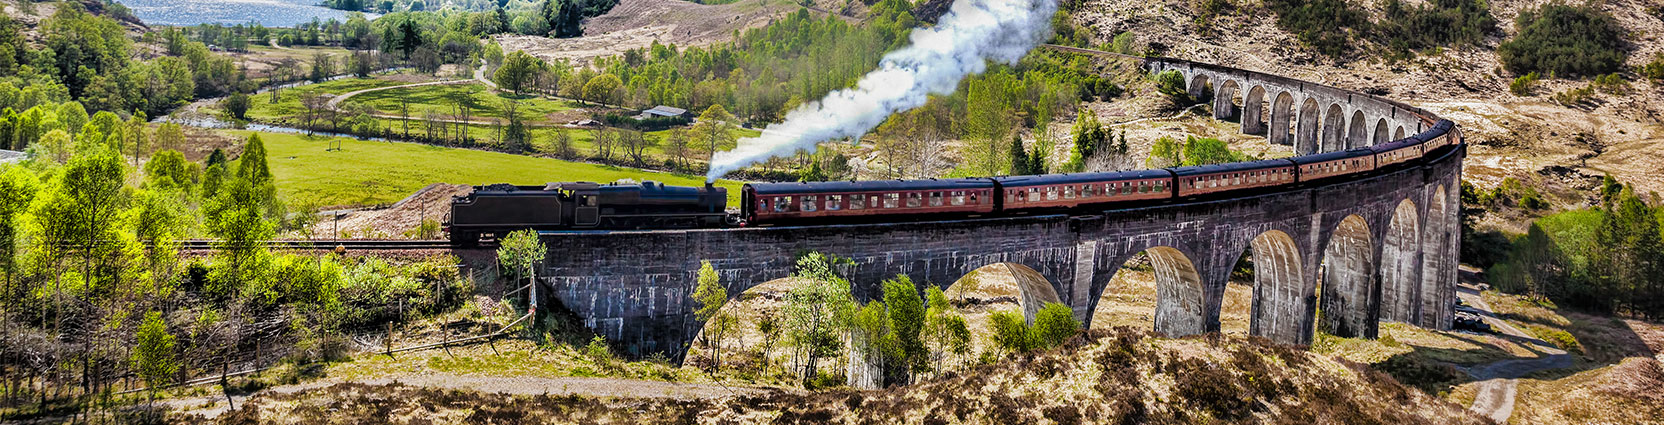 A train on Scotland's Glenfinnan Viaduct.